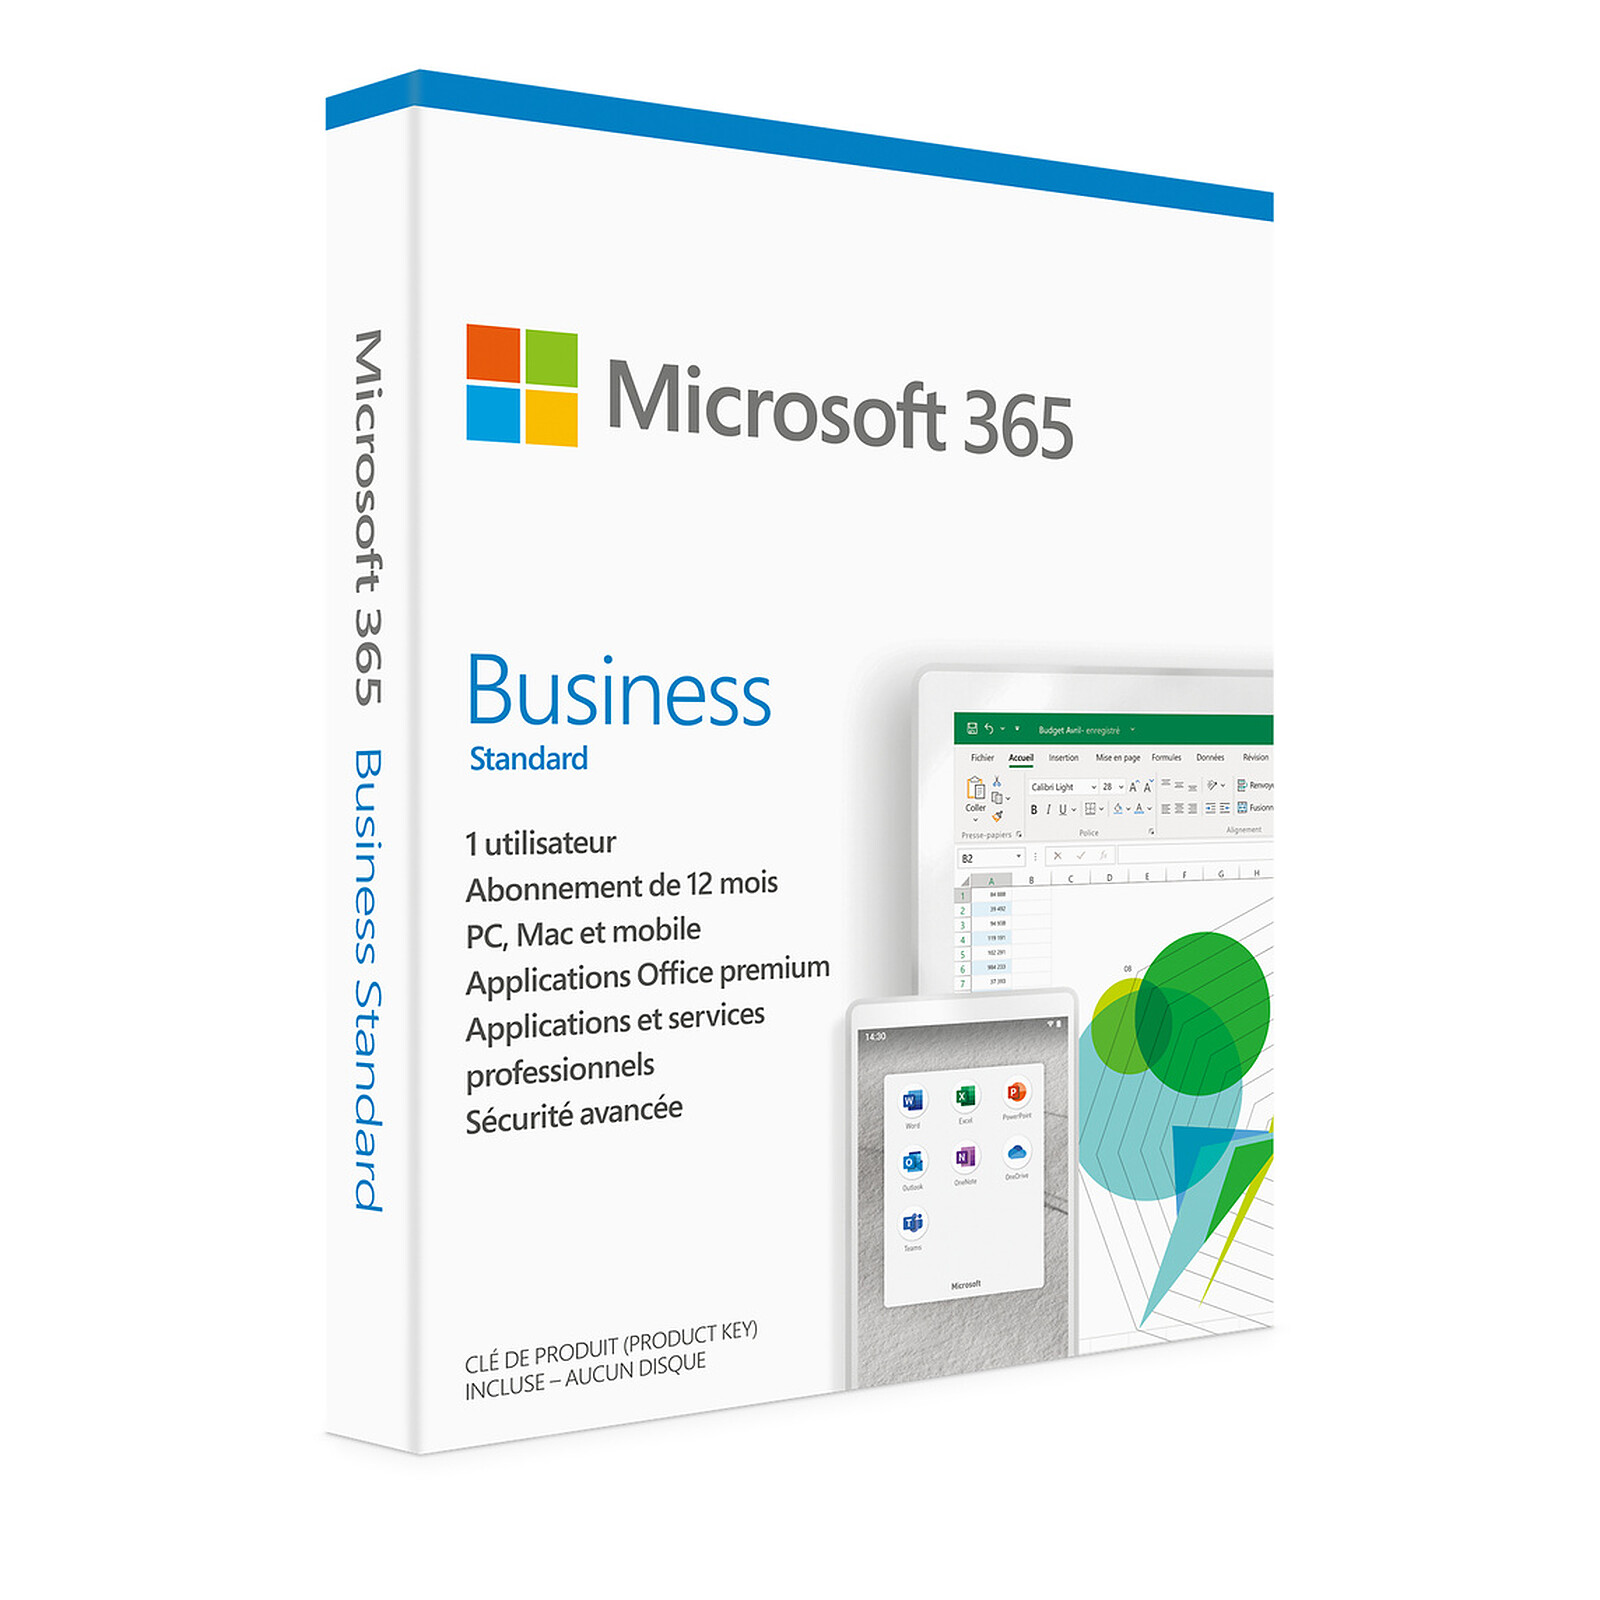 Microsoft 365 Business Standard - Programa de oficina Microsoft en LDLC |  ¡Musericordia!